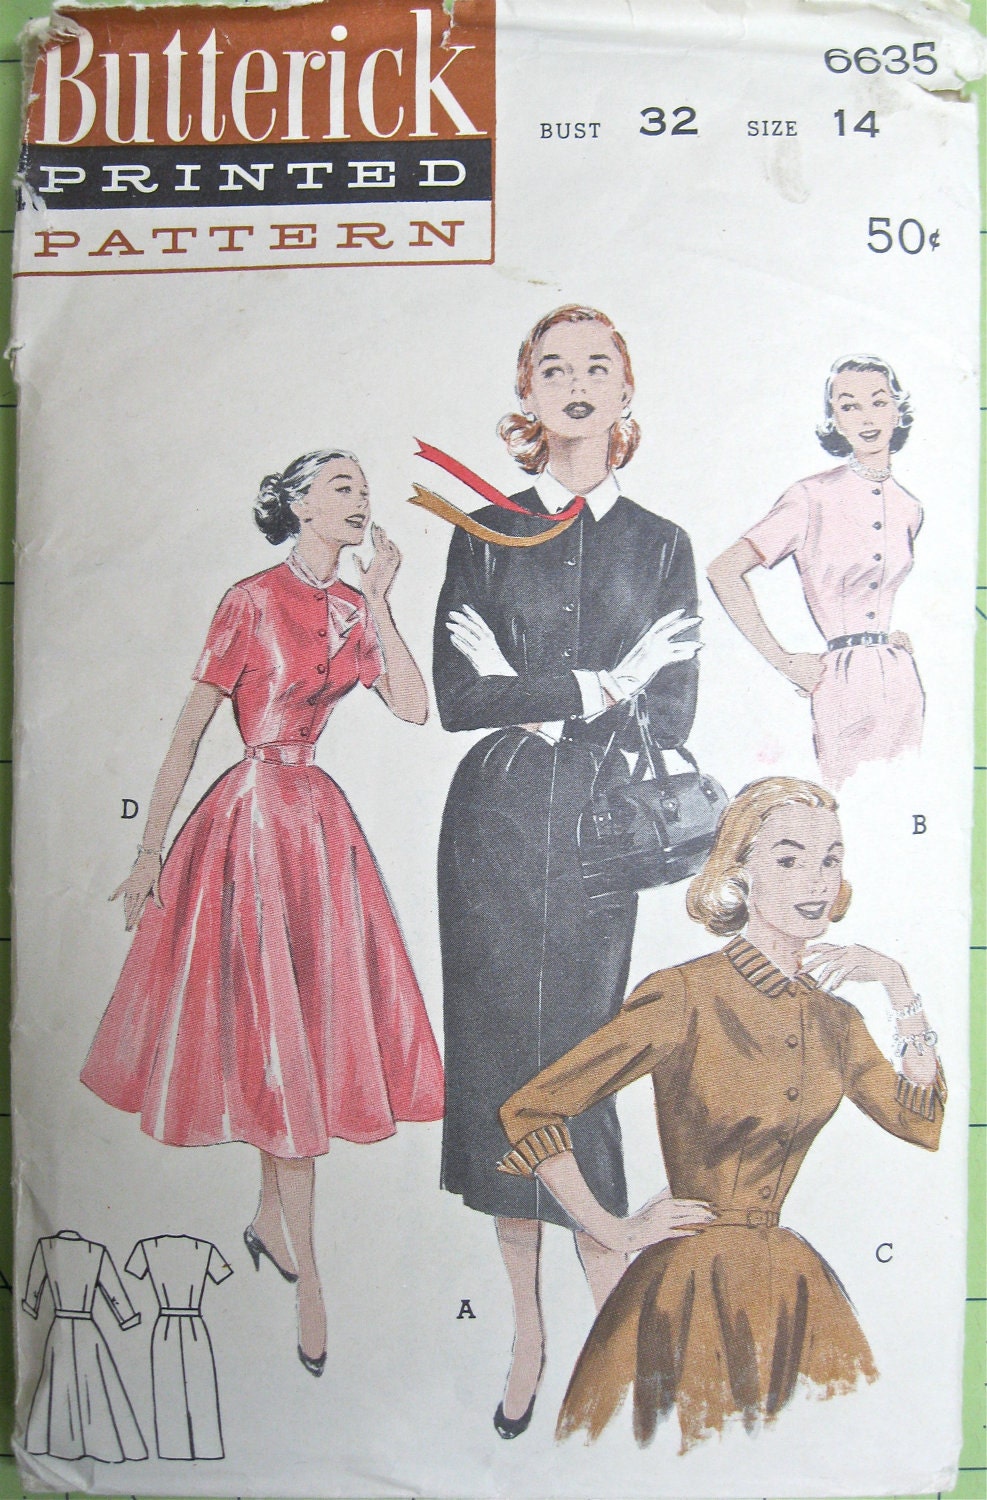 Vintage Dress Sewing Pattern Butterick 6635 1950s